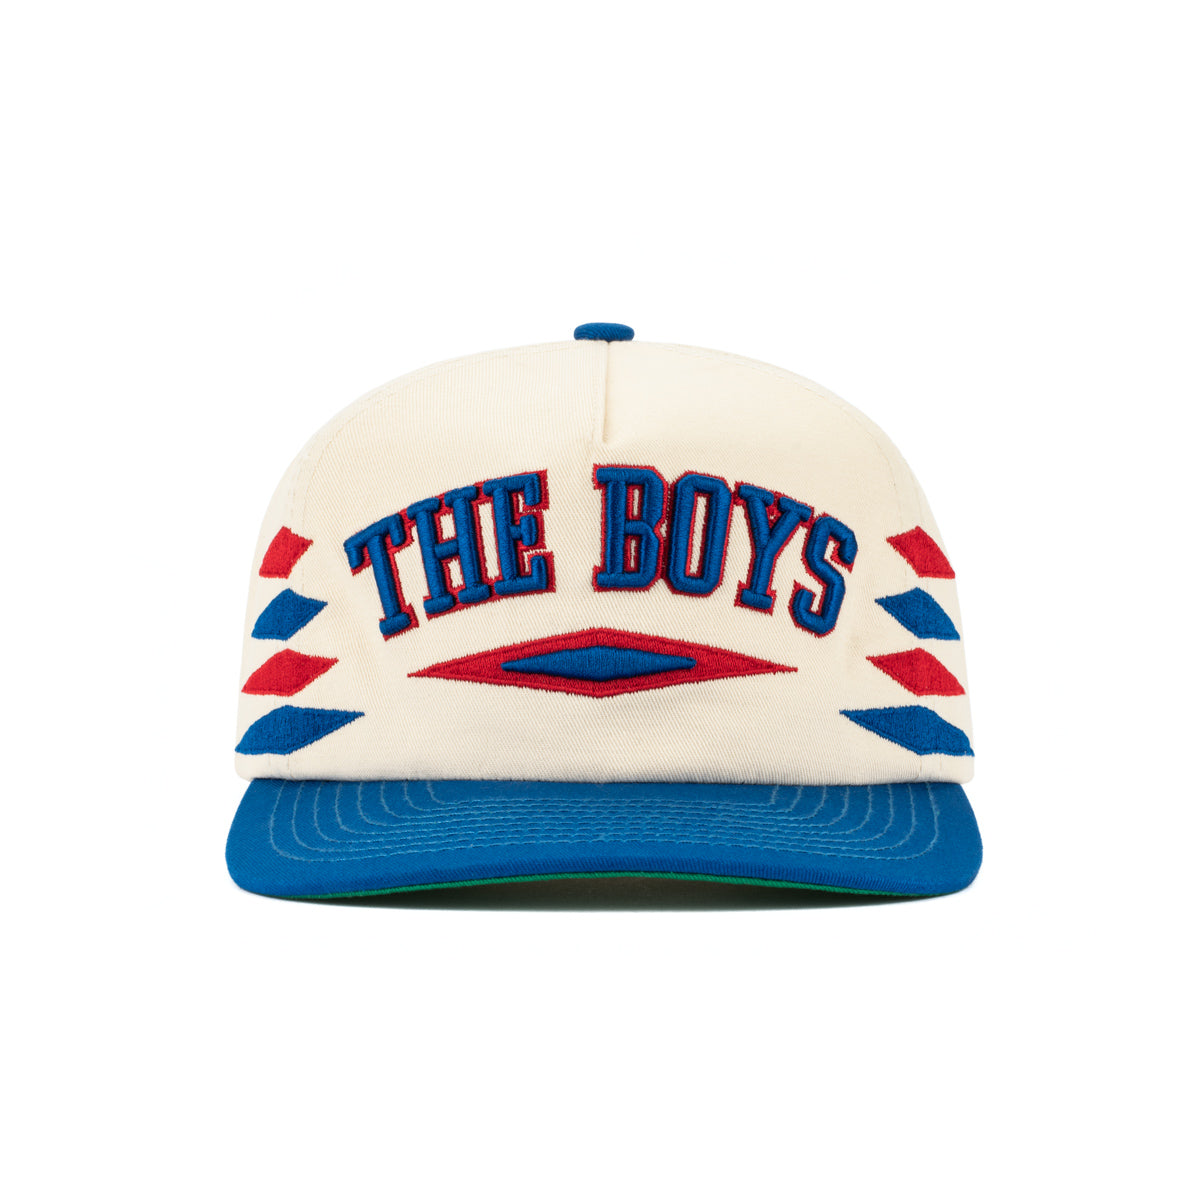 The Boys Diamond Retro Hat-Hats-Bussin With The Boys-Tan/Blue-OS-Barstool Sports